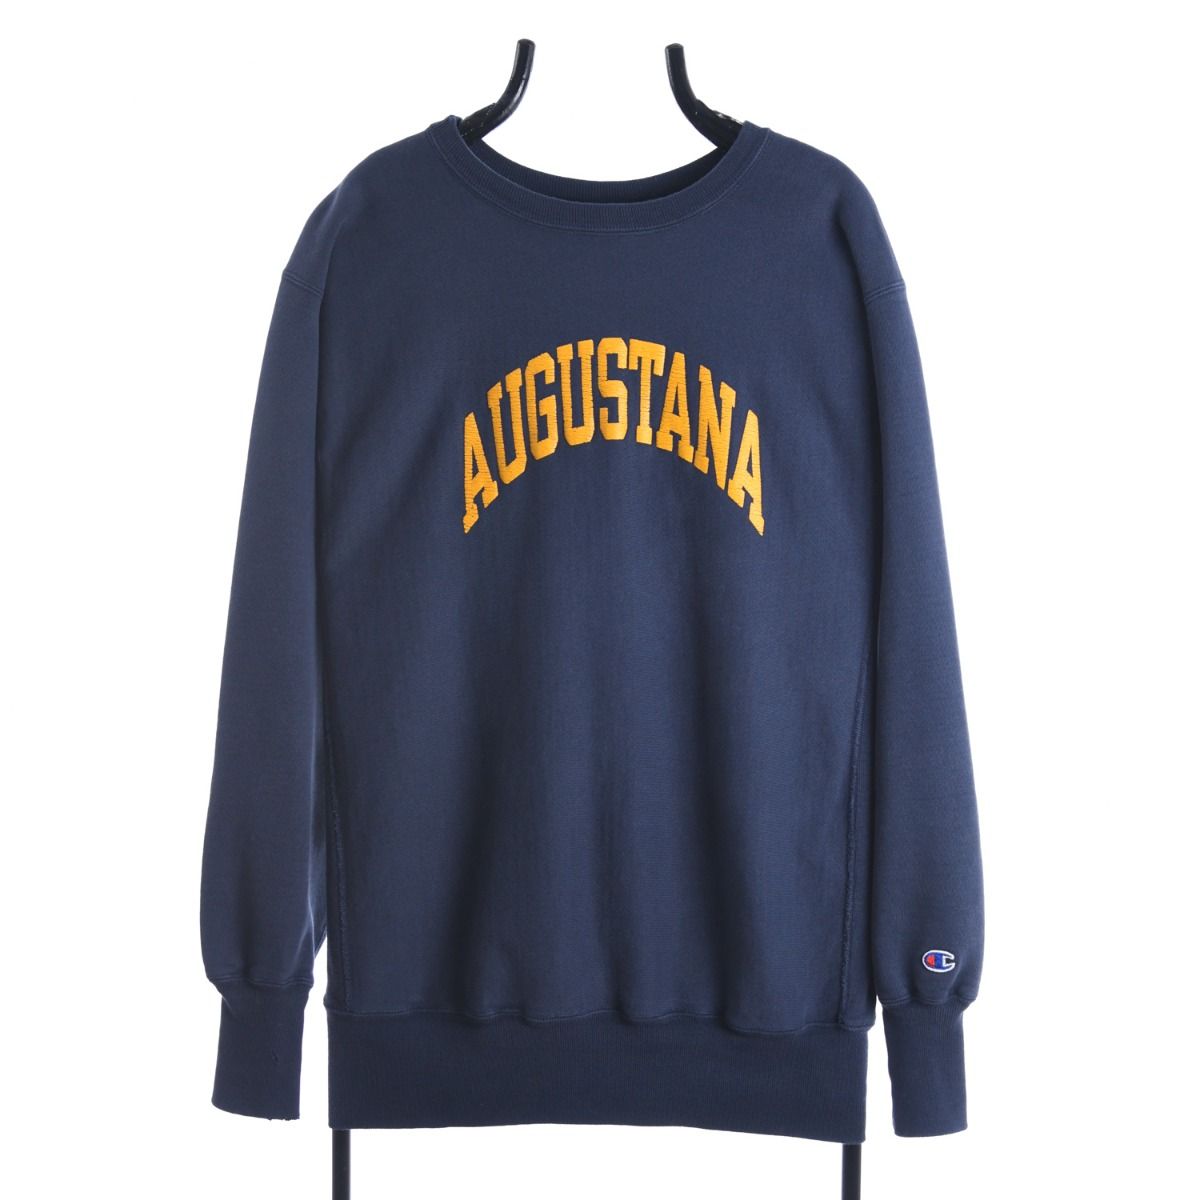 Champion 'Augustana' Early 1990s Reverse Weave Sweatshirt